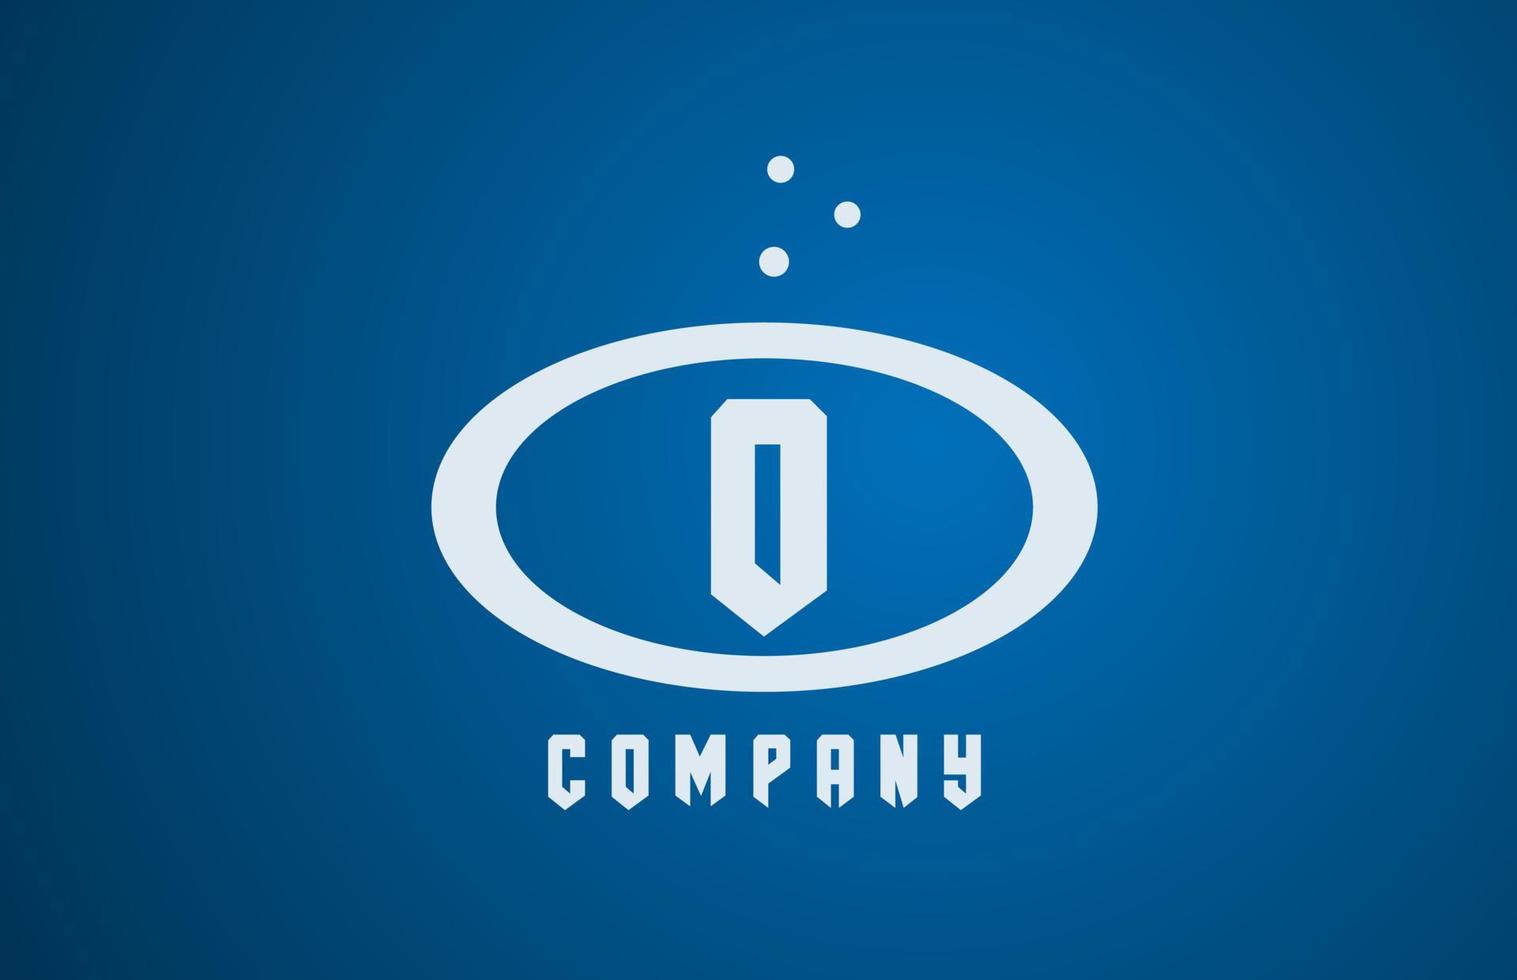 blanco azul o elipse alfabeto negrita letra logo con puntos corporativo creativo modelo diseño para negocio y empresa vector